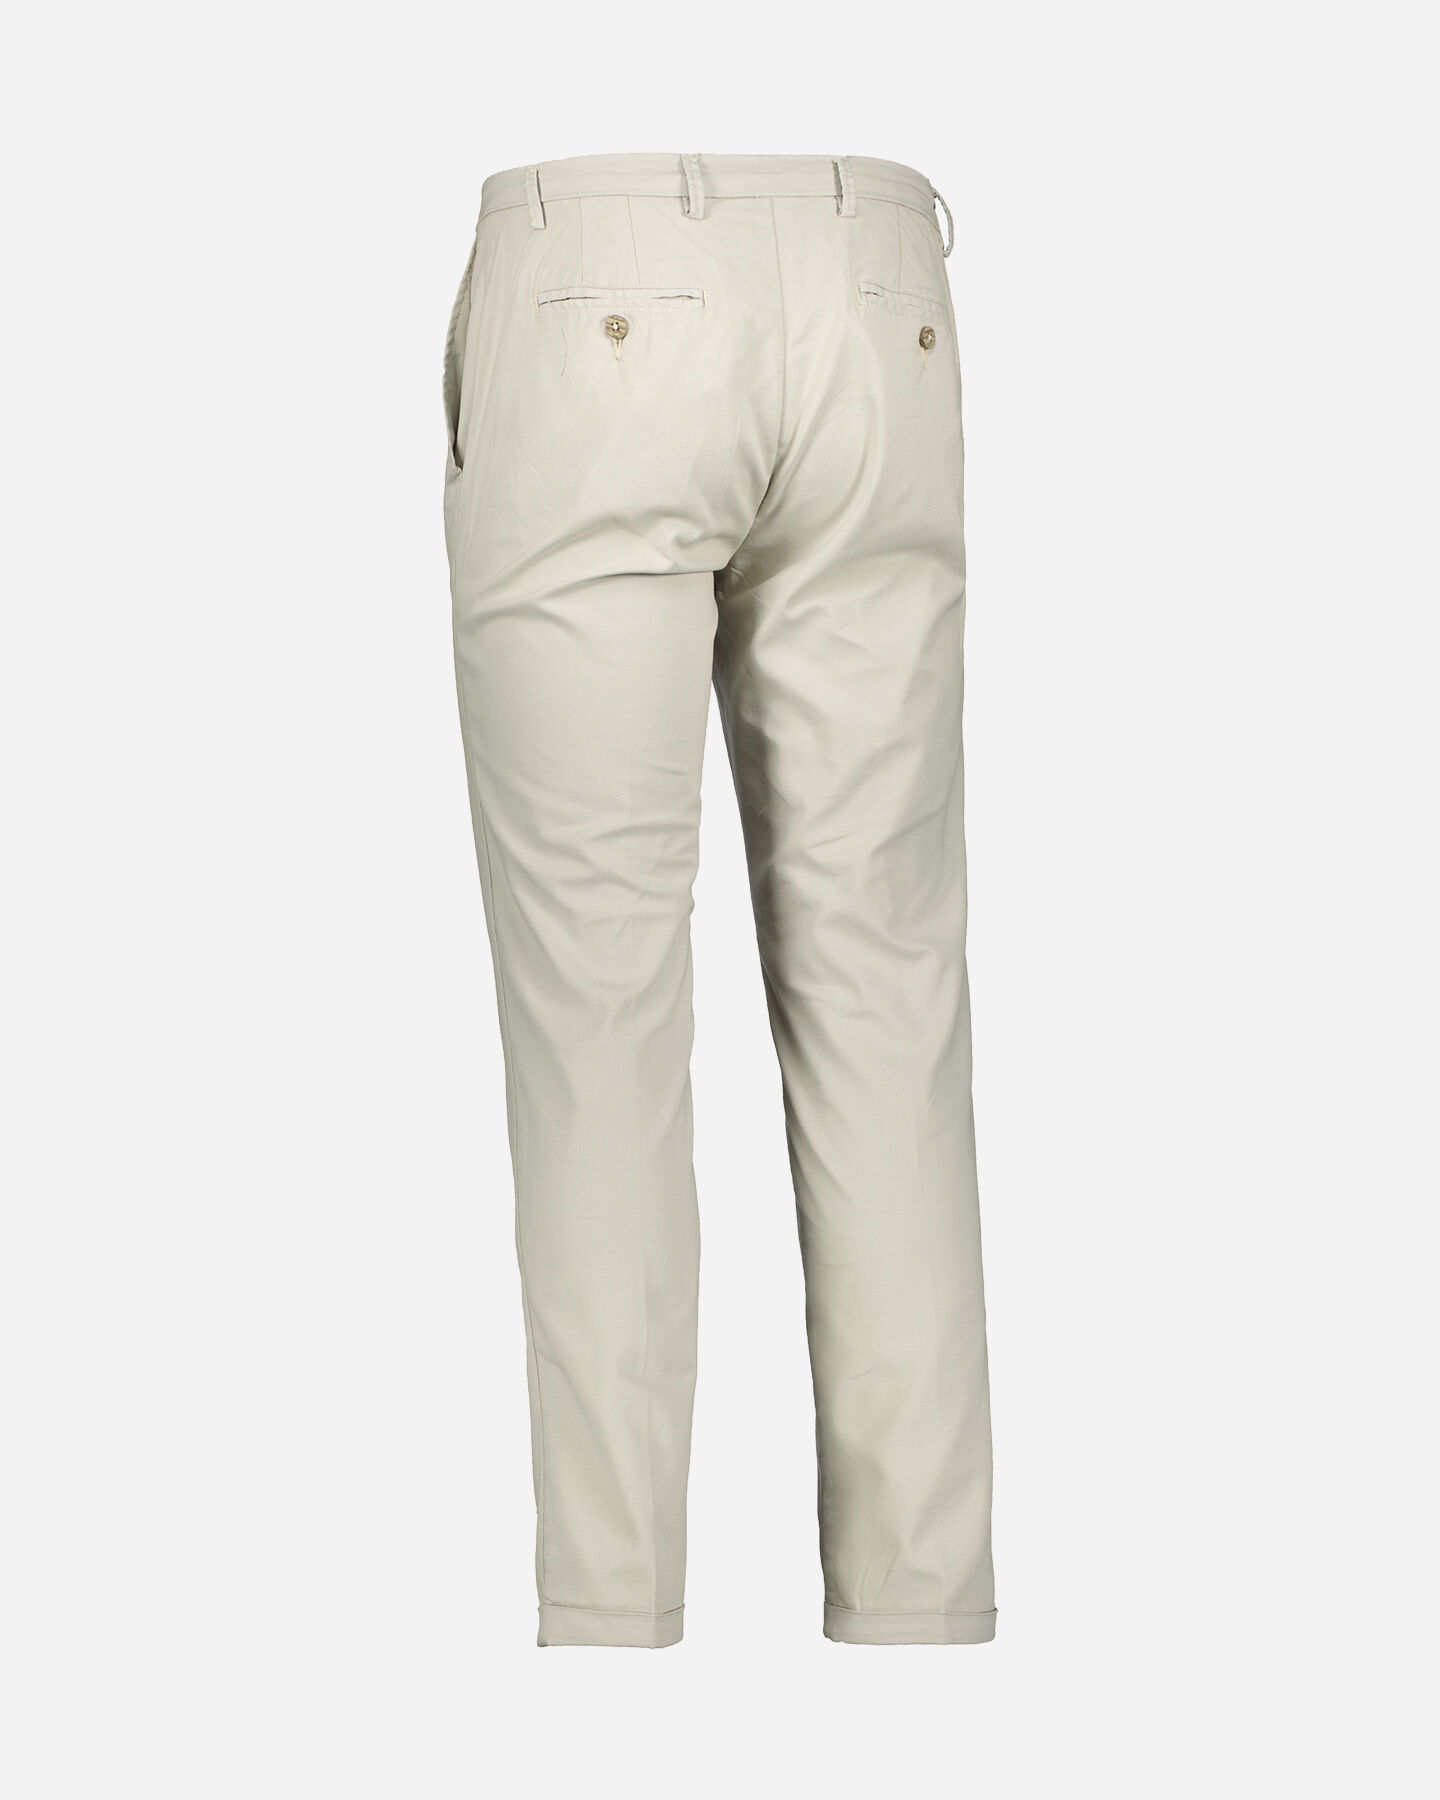  Pantalone BEST COMPANY SAN BABILA M S4122337|006|46 scatto 5